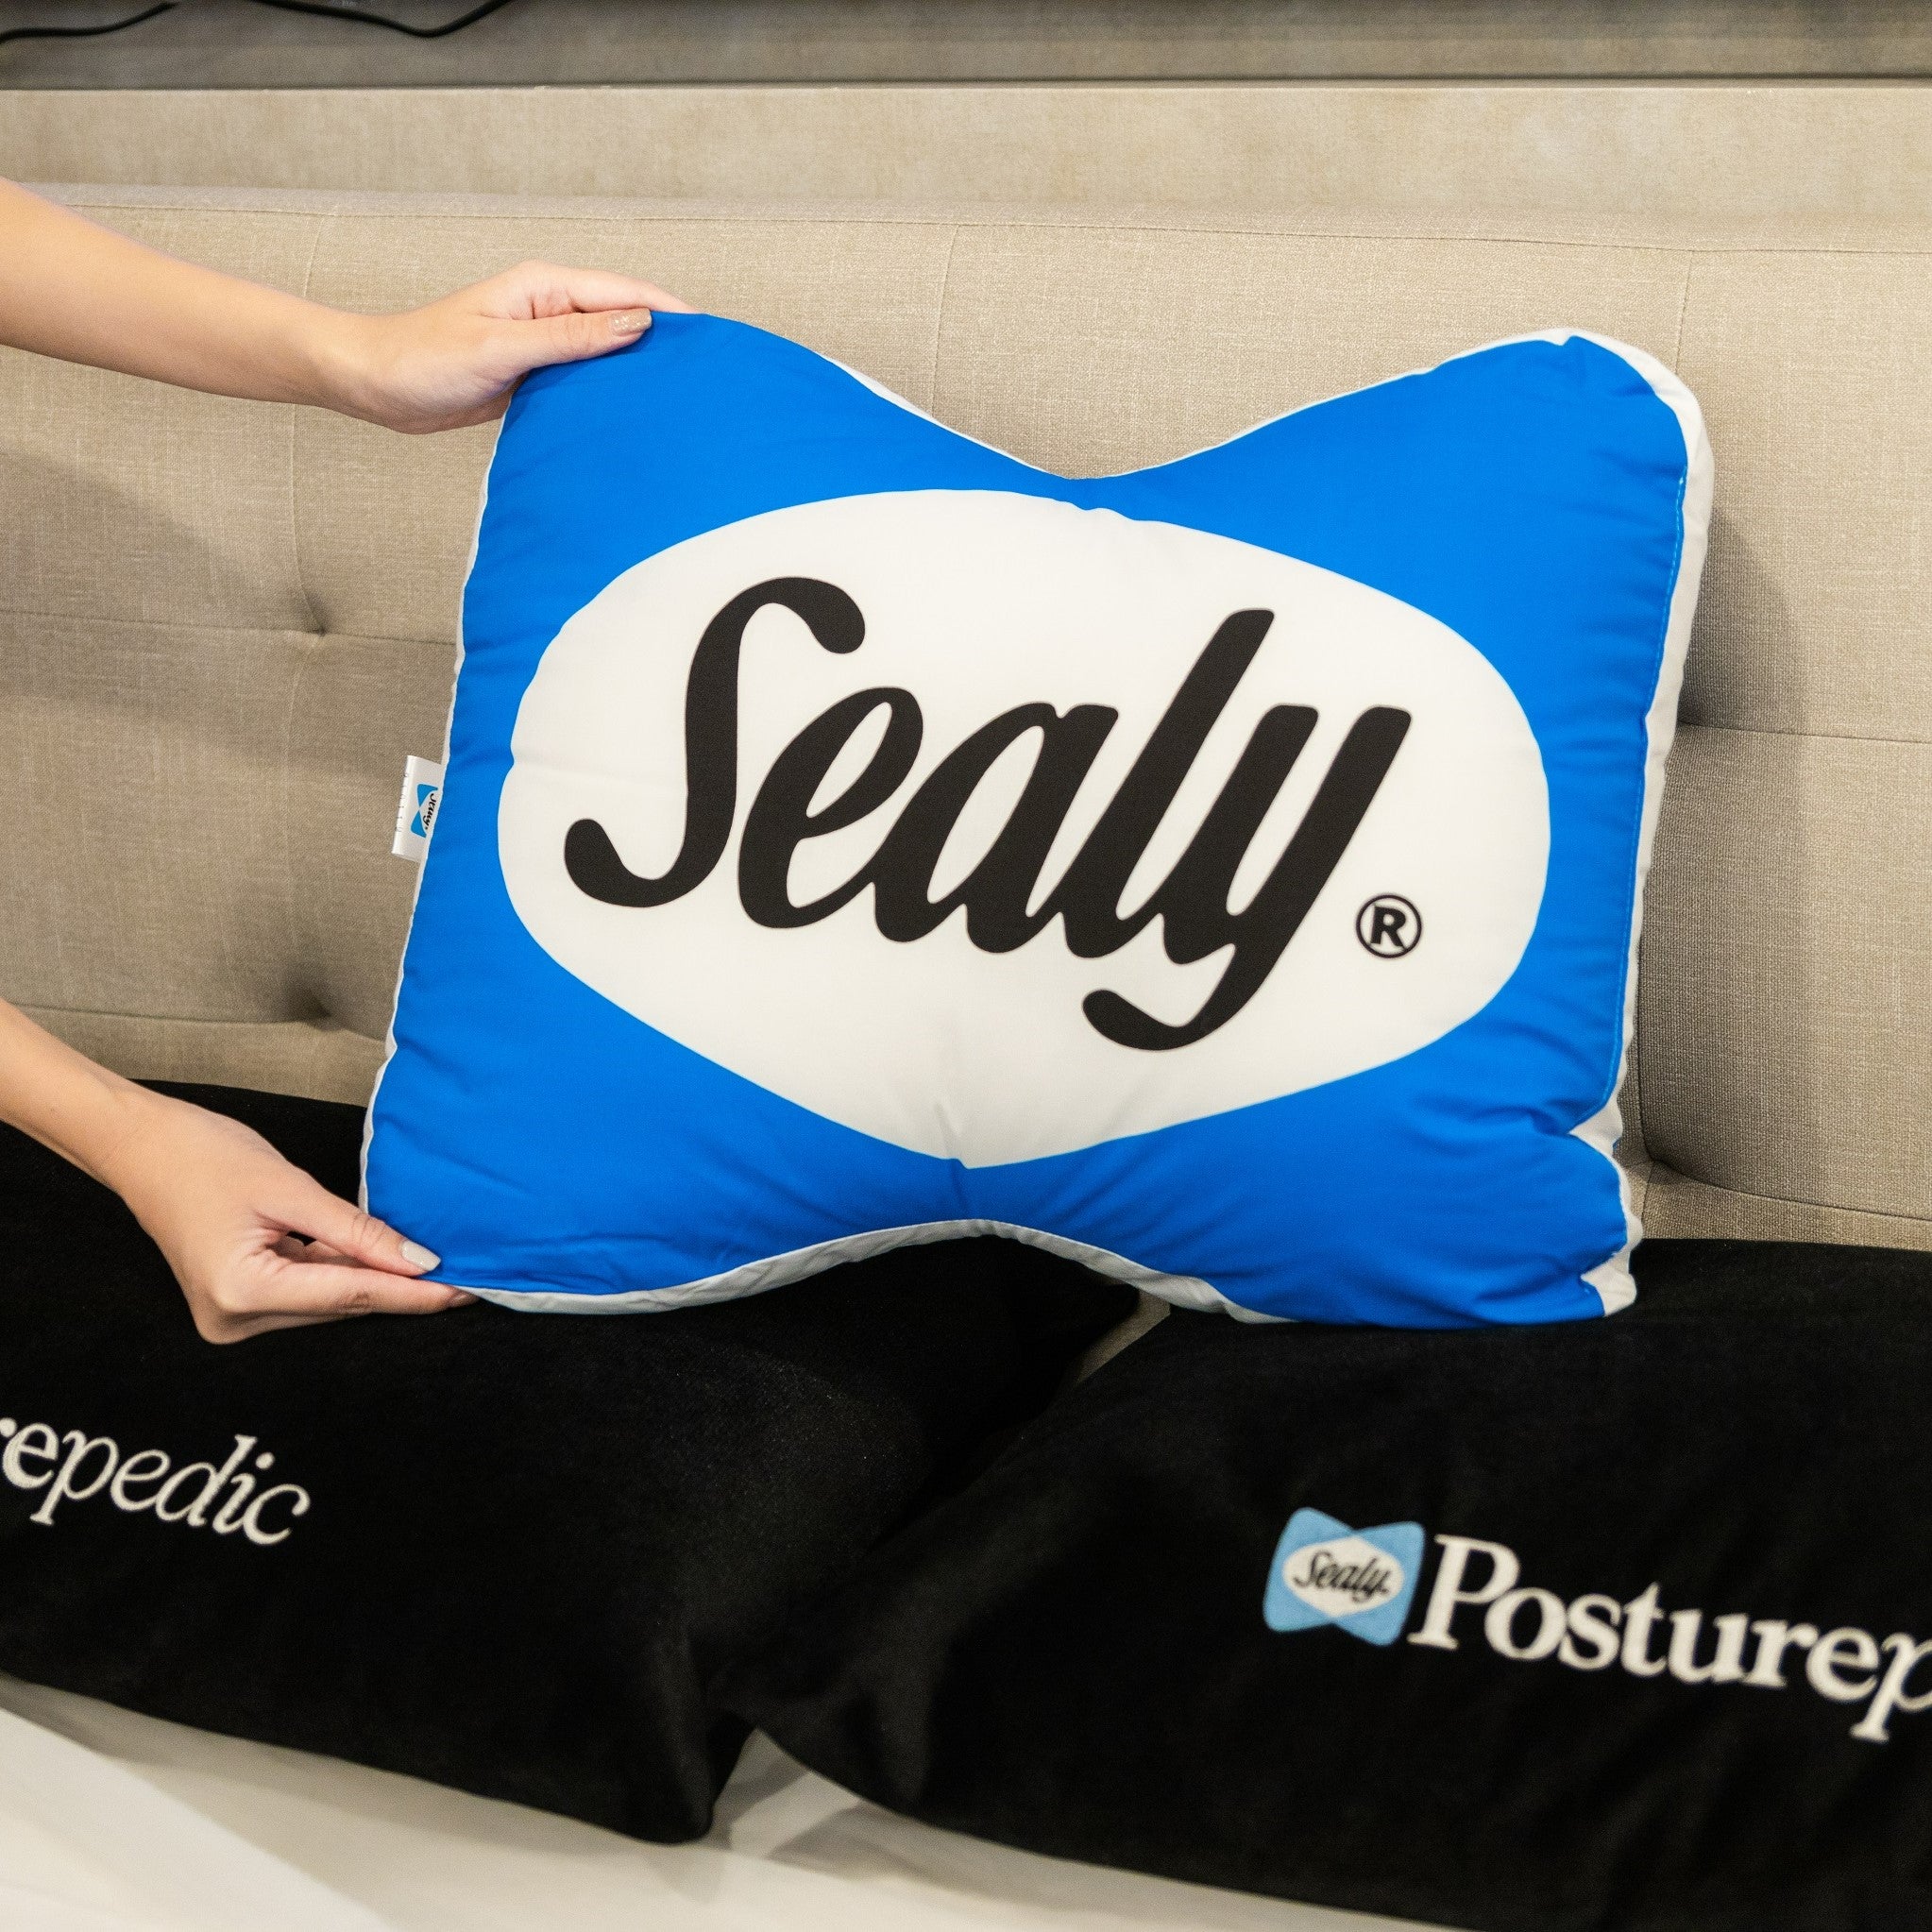 Sealy Logo Cushion